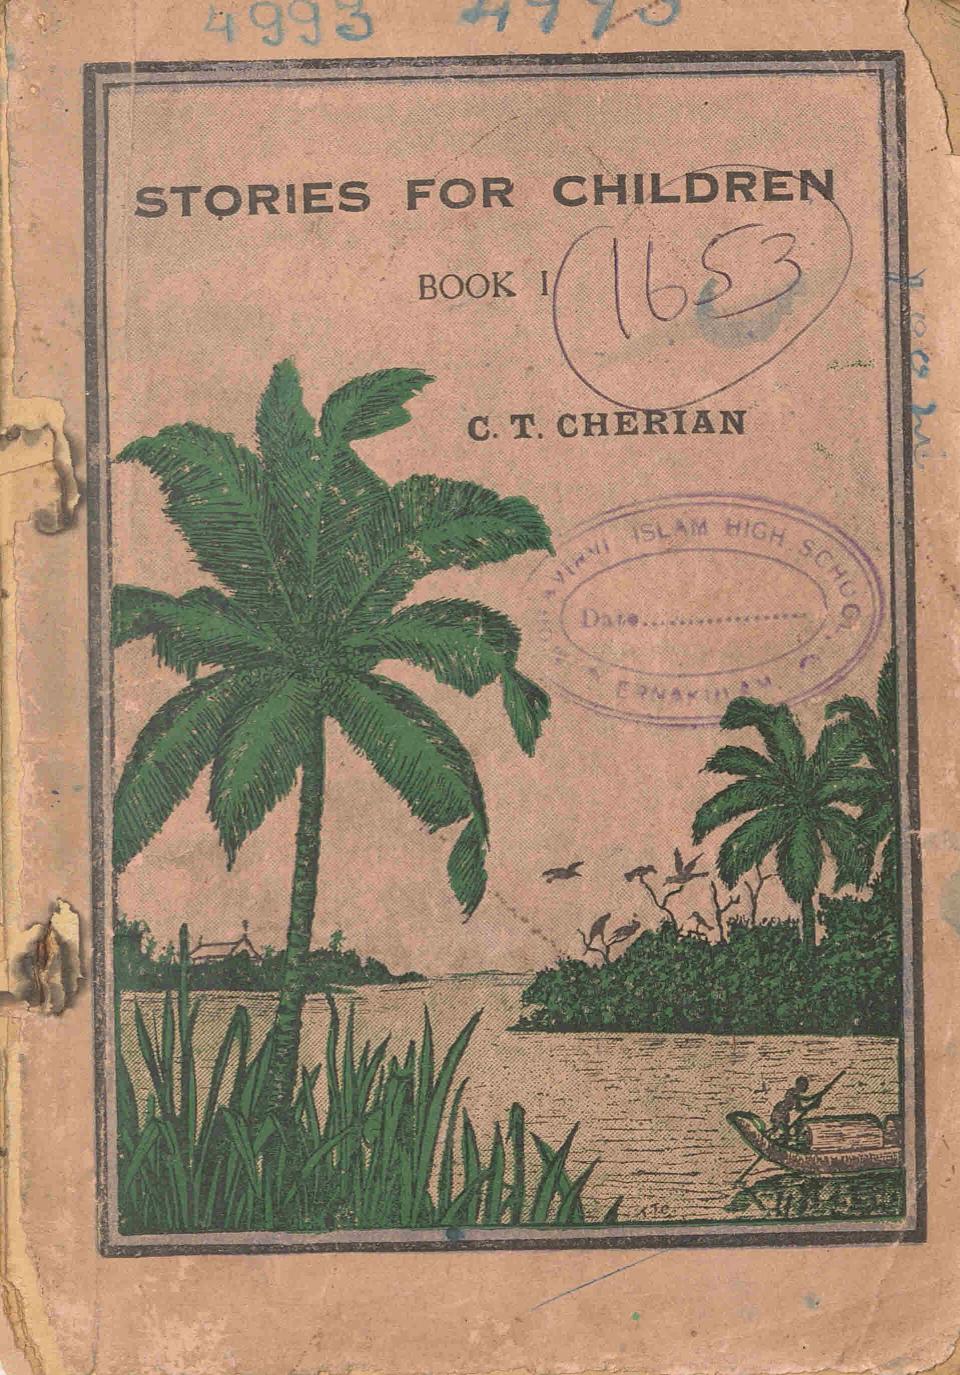 1960 - Stories for Children Book 1 - C.T. Cherian